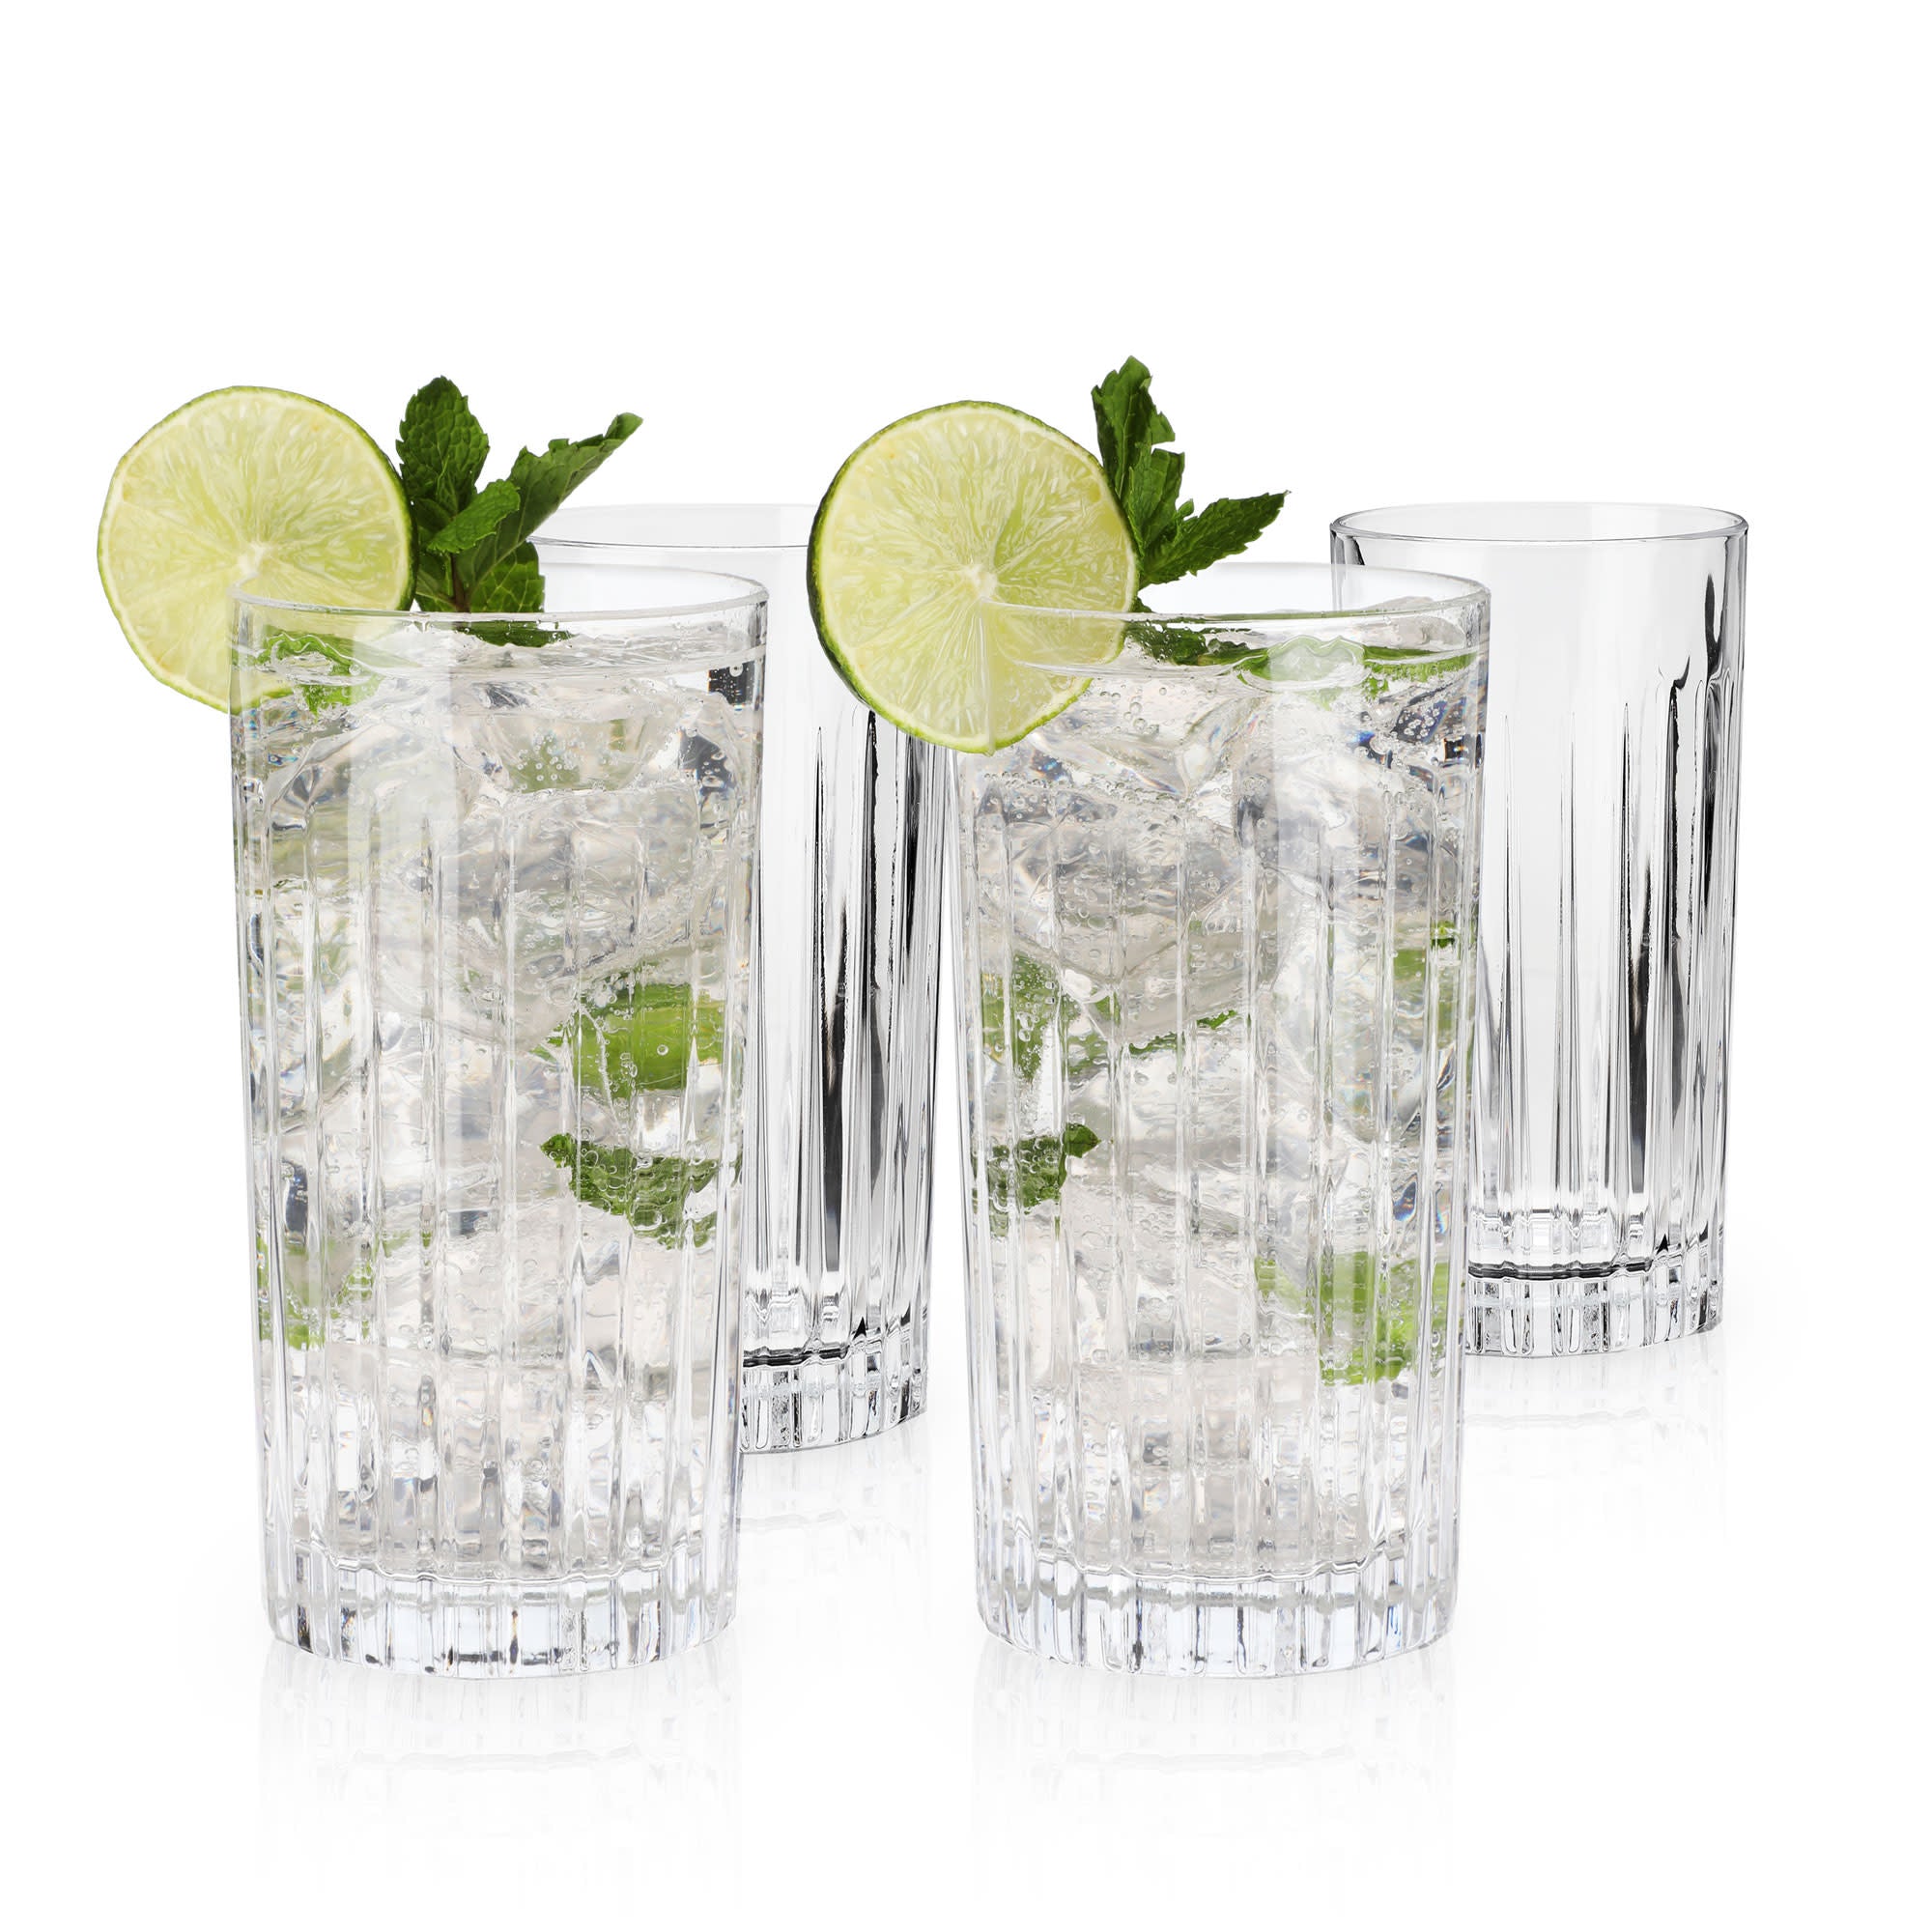 Claremont Crystal Highball Glasses Drinkware Set of 4